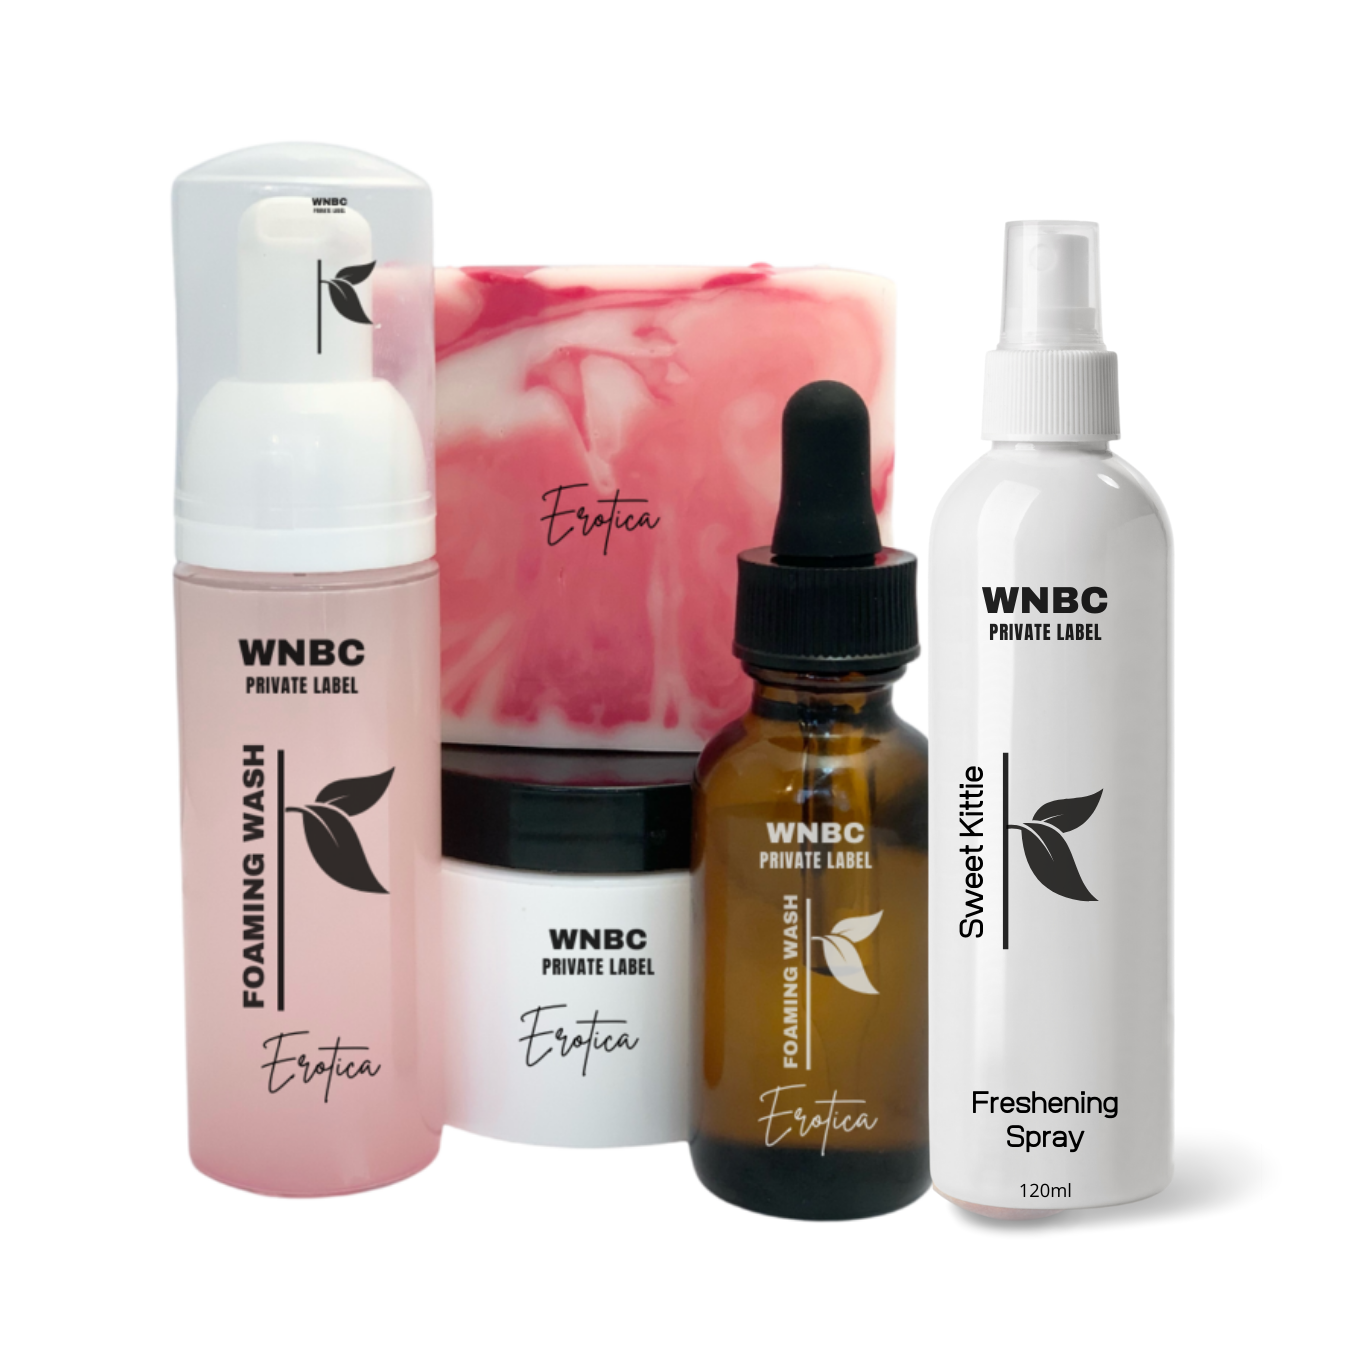 Exclusive Offer Feminine Self Care Kit + Sweet Kittie Feminine Spray - Dolce LeChe & Mint